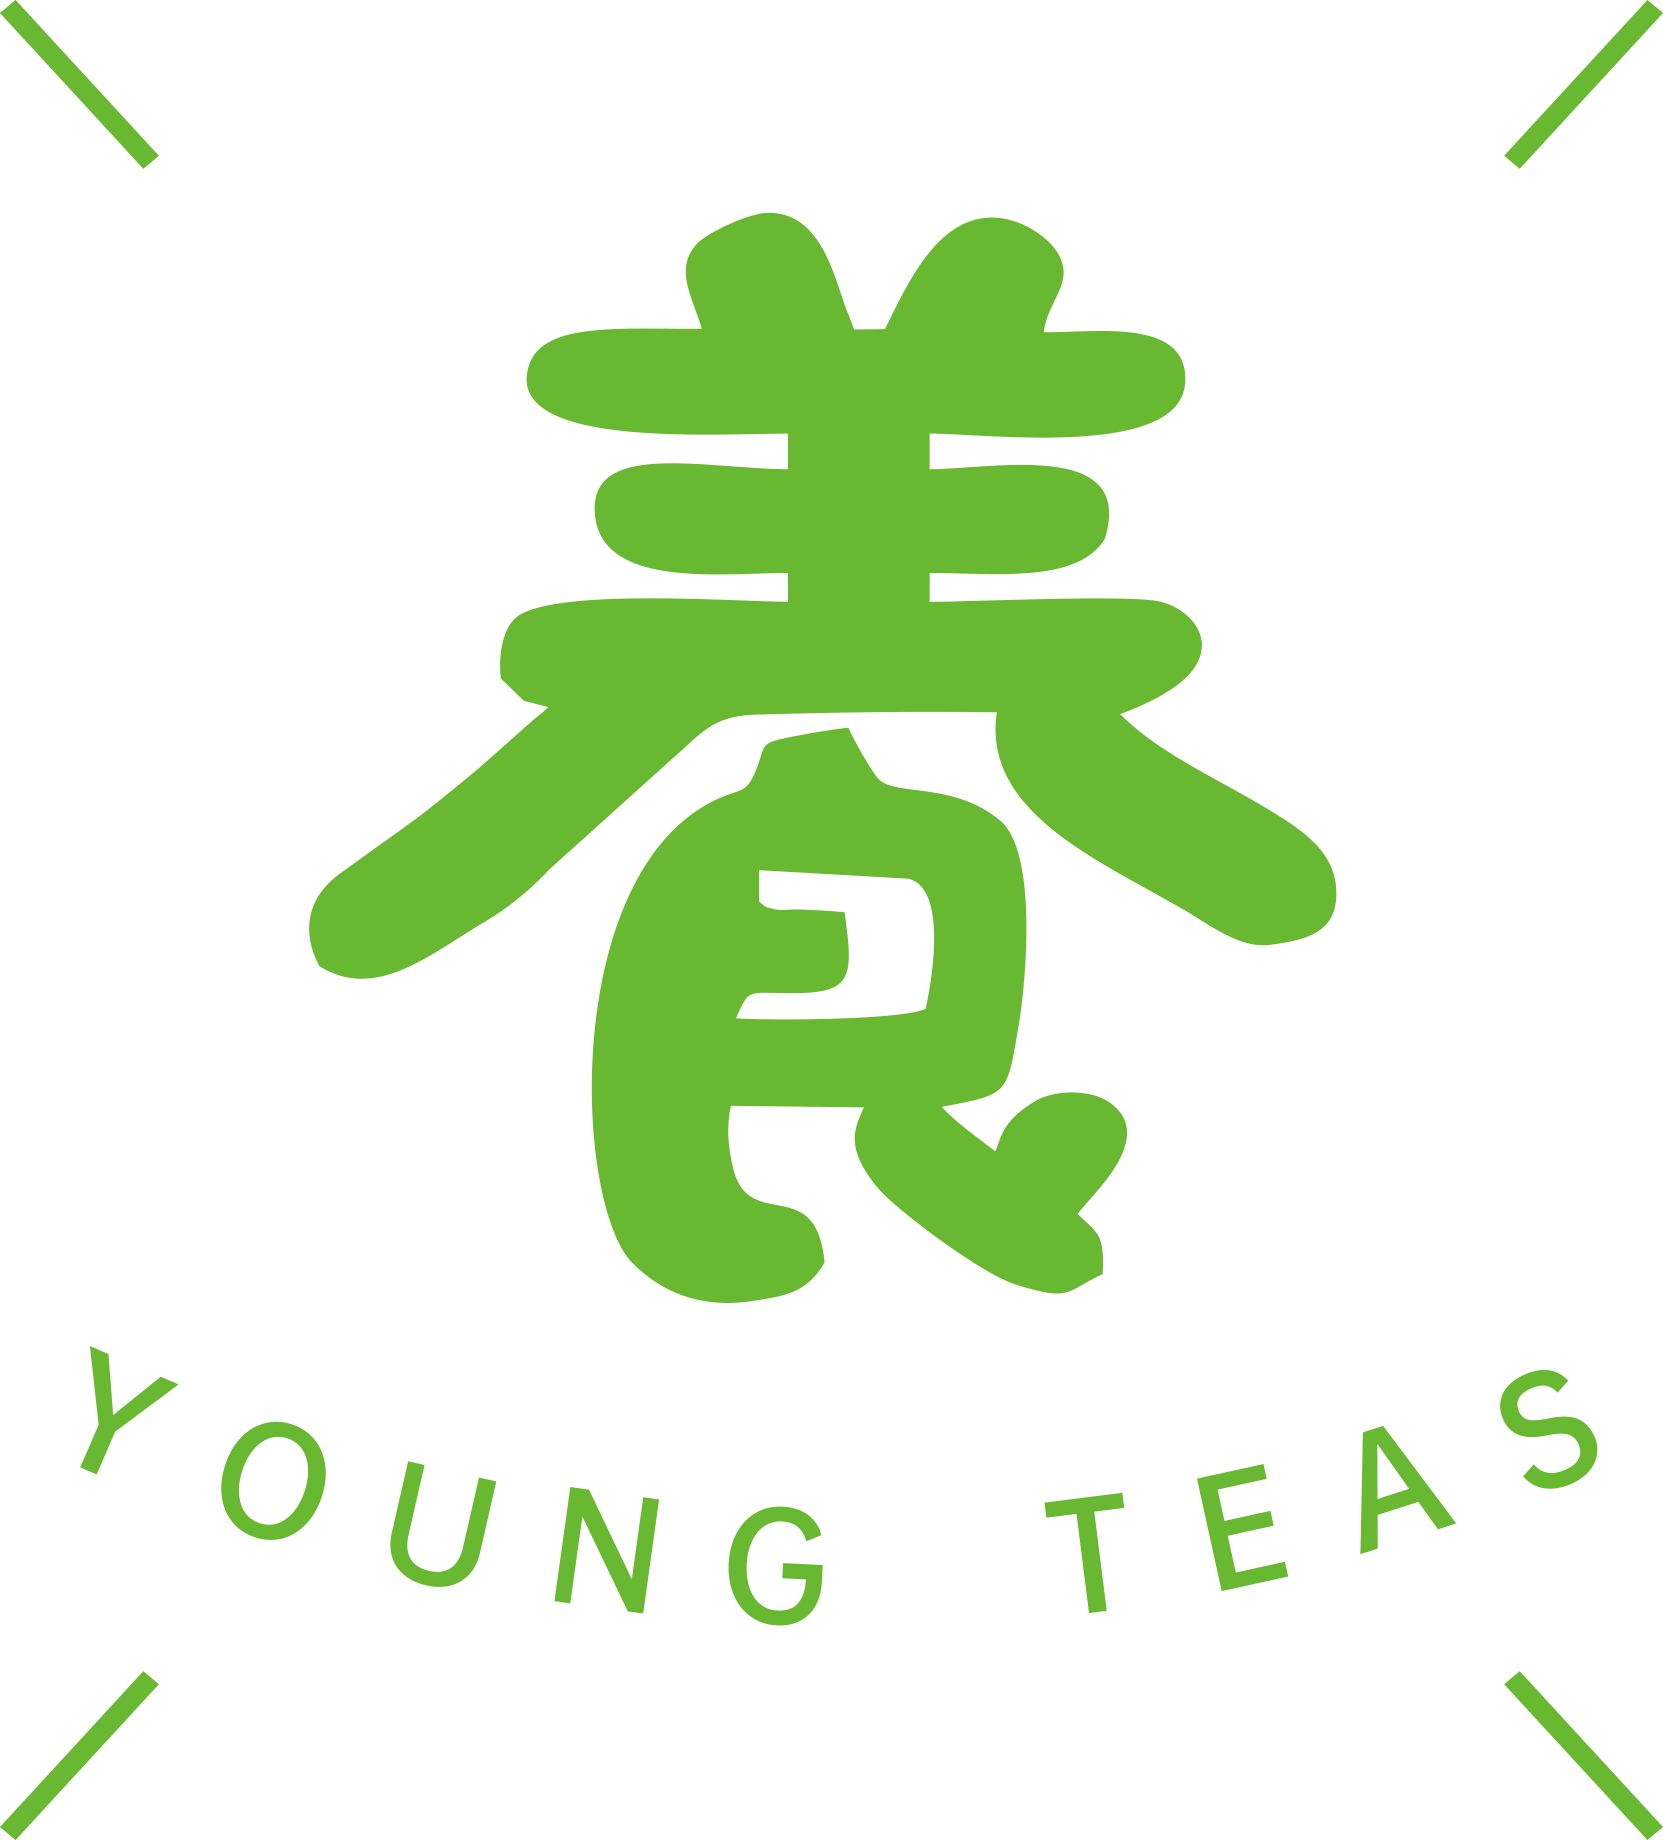 Young Teas